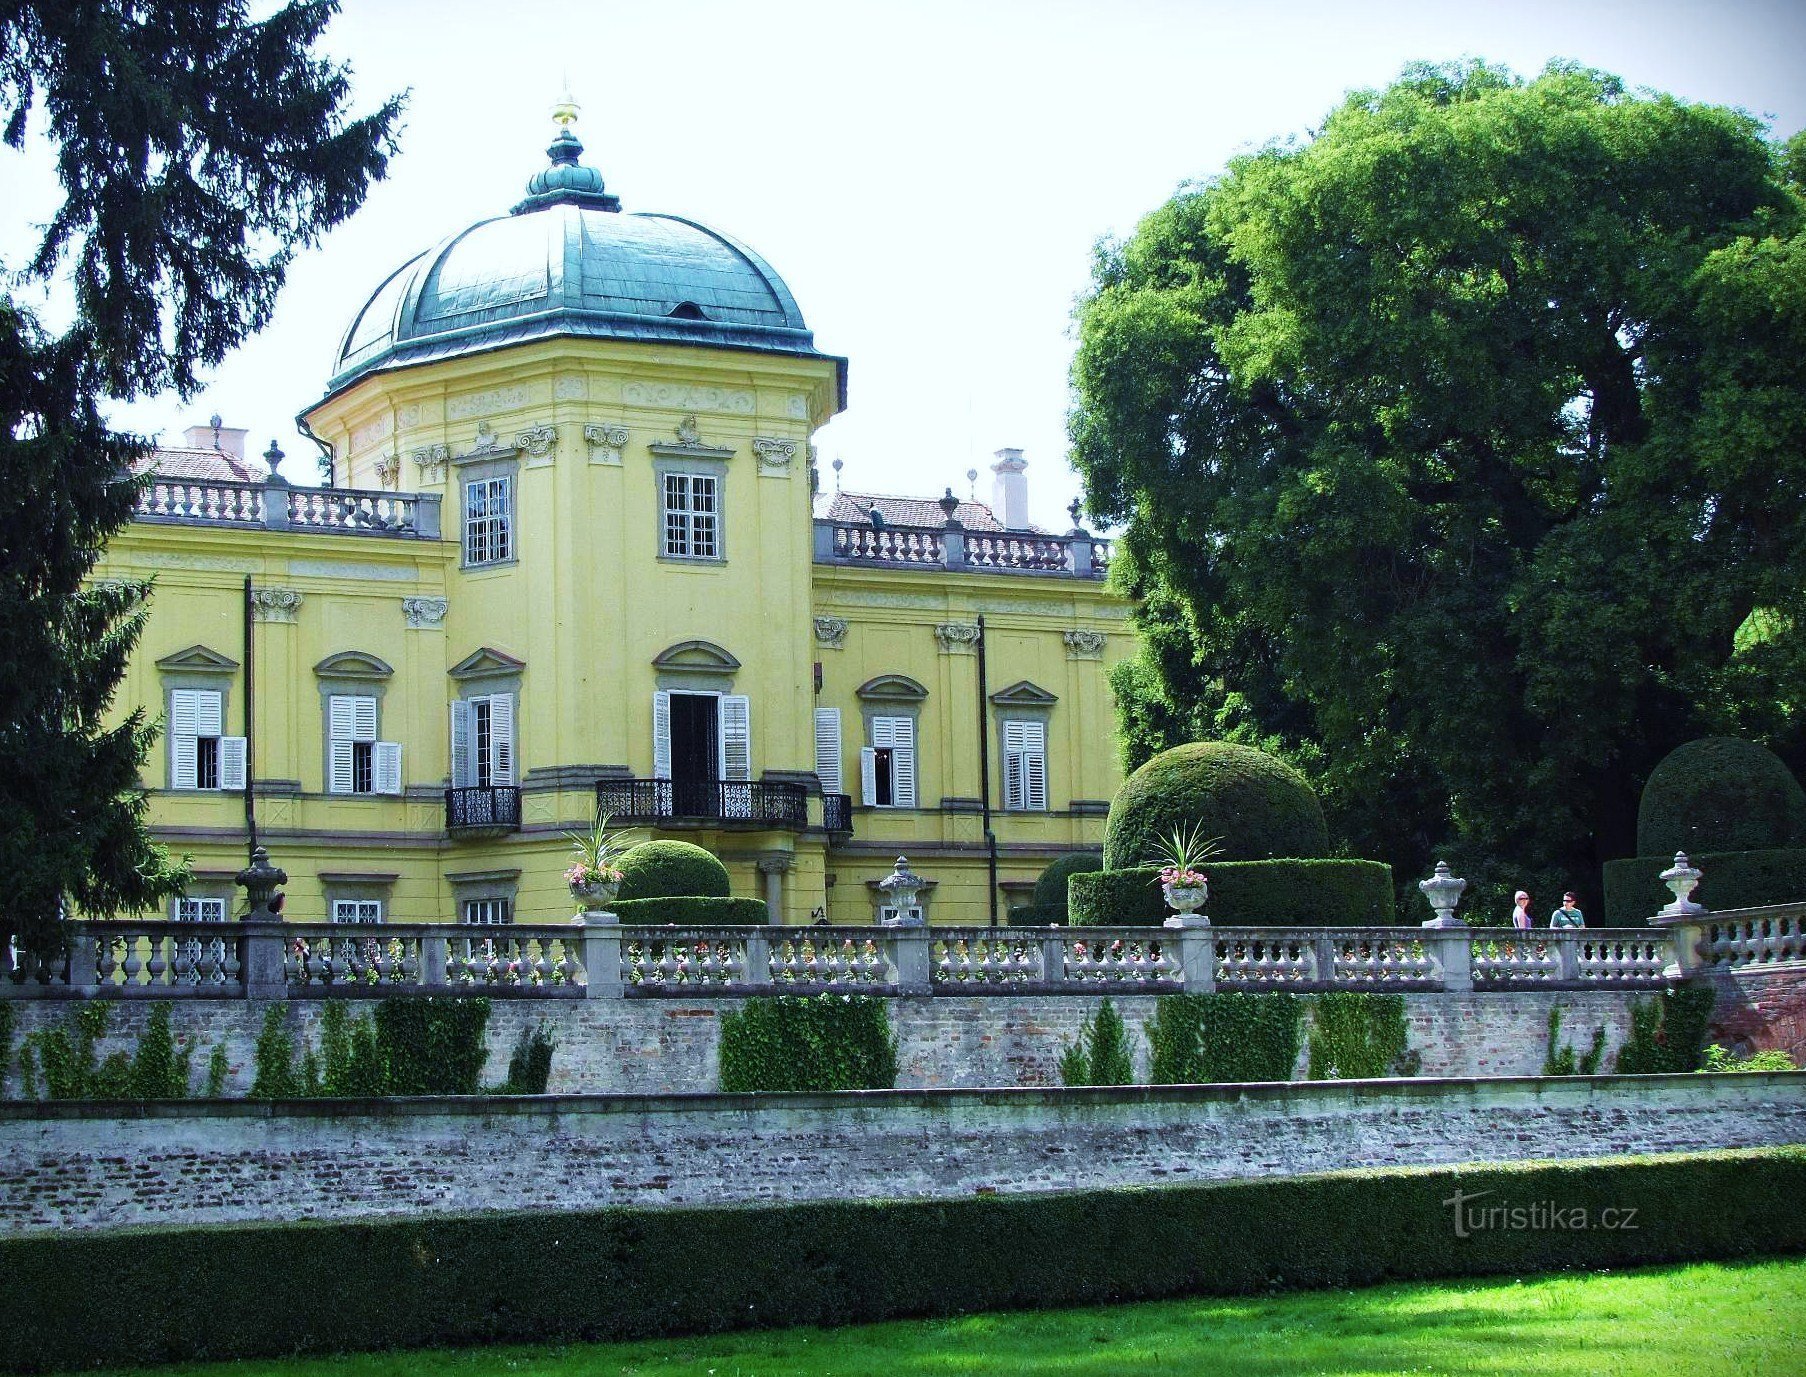 Romantisk slotshave med landskabspark i Buchlovice